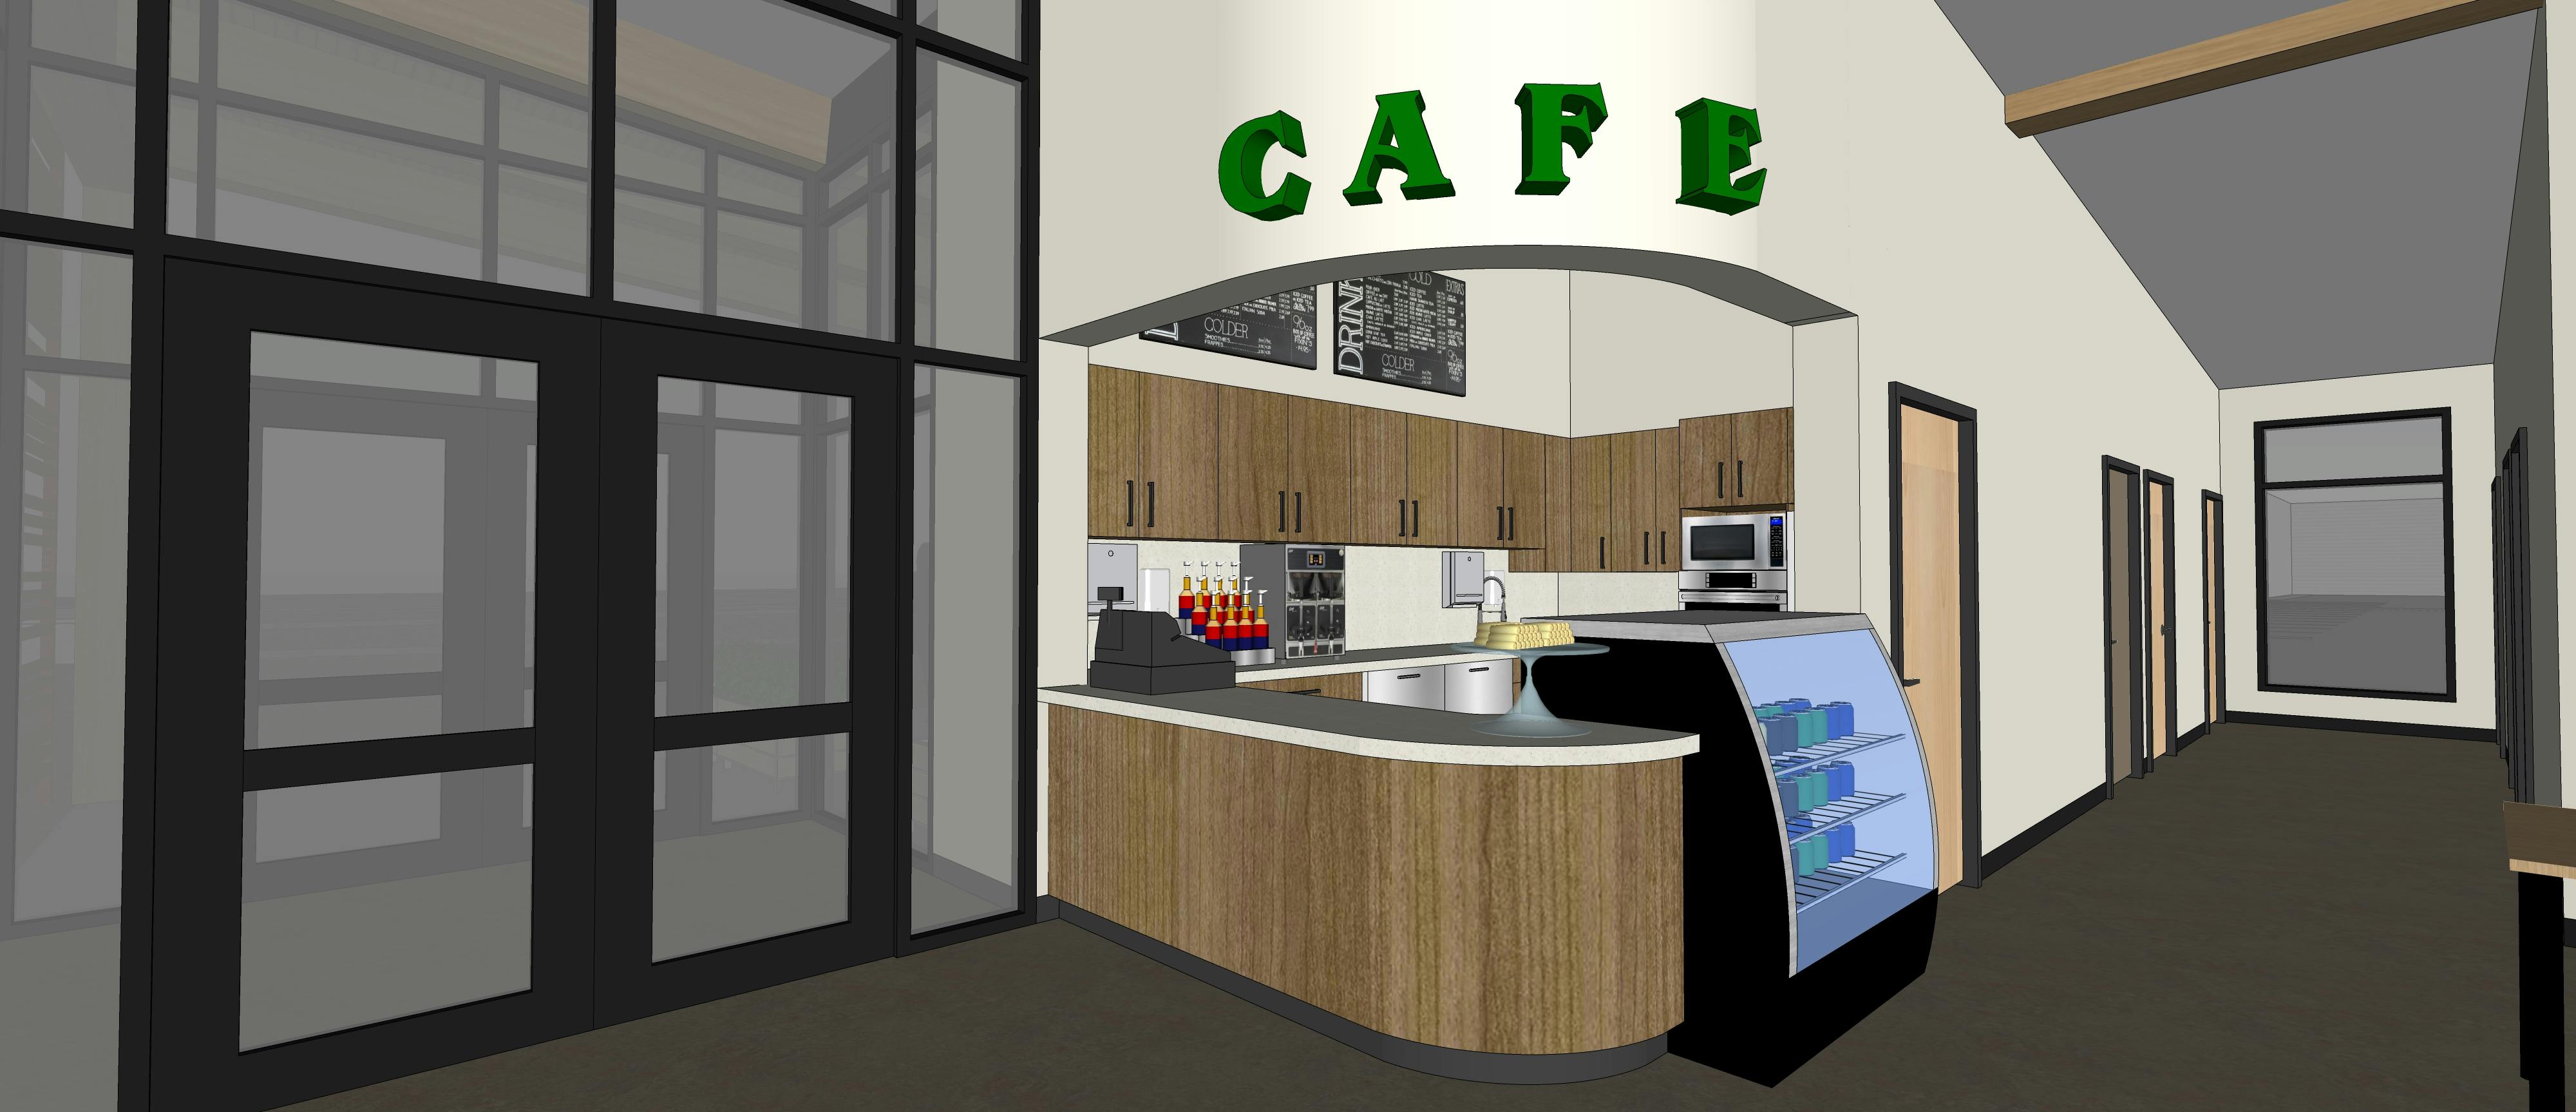 Cafe 1.jpg